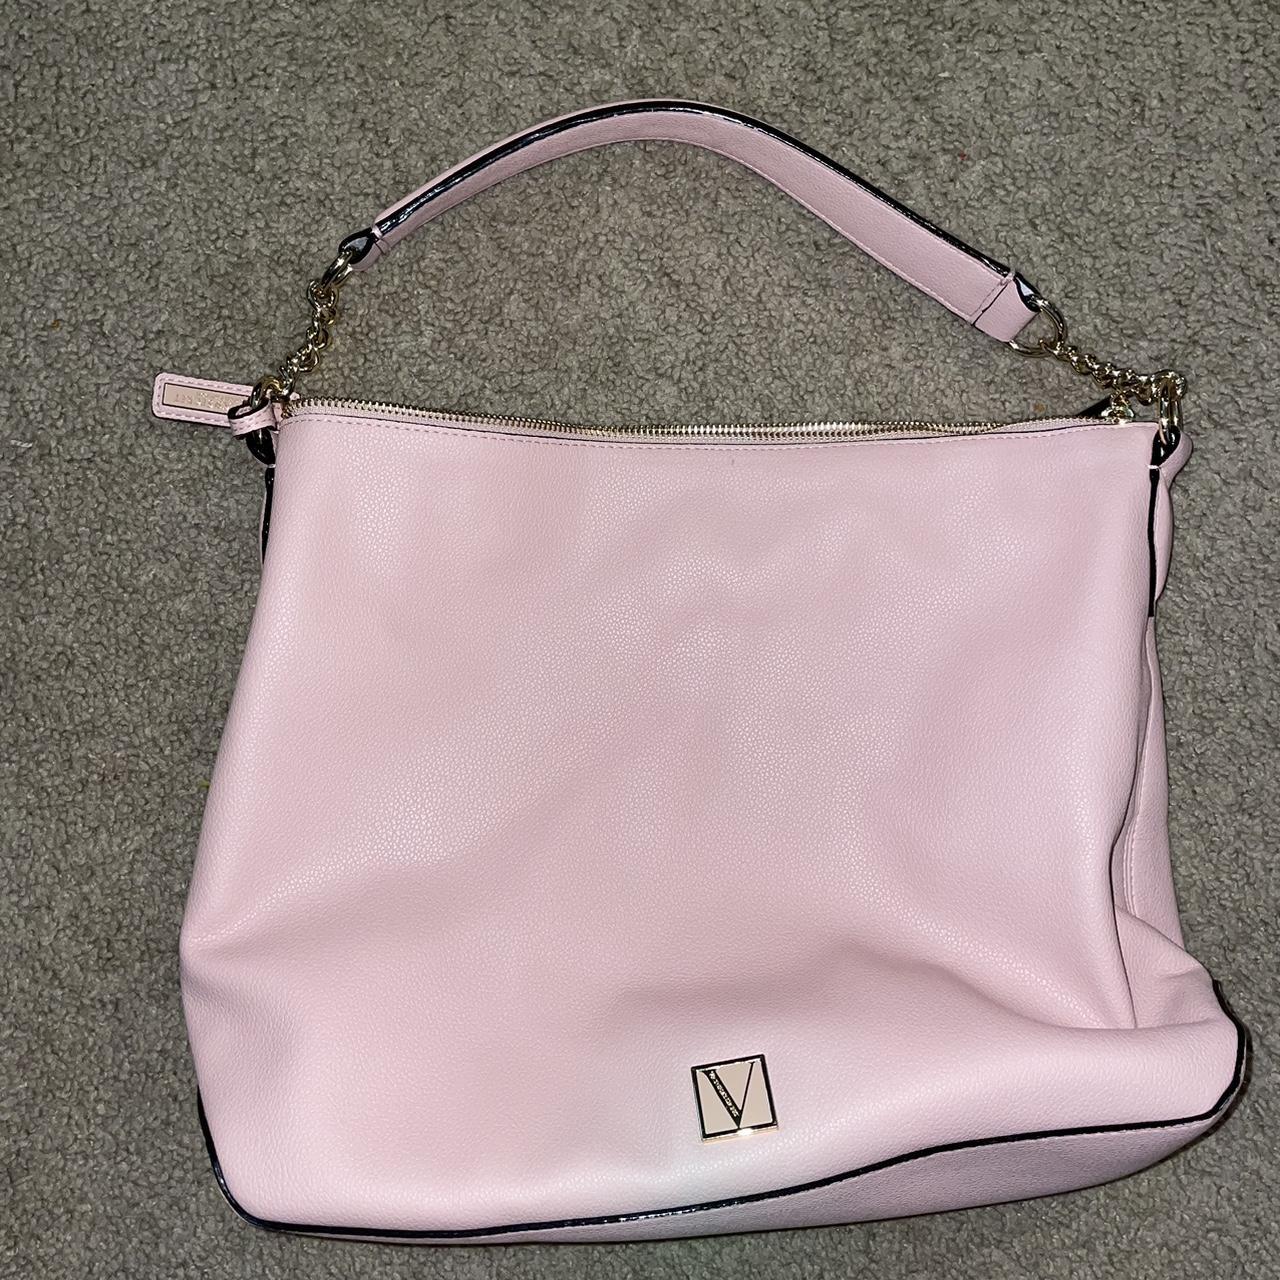 Victoria's Secret Women's Bag - Pink